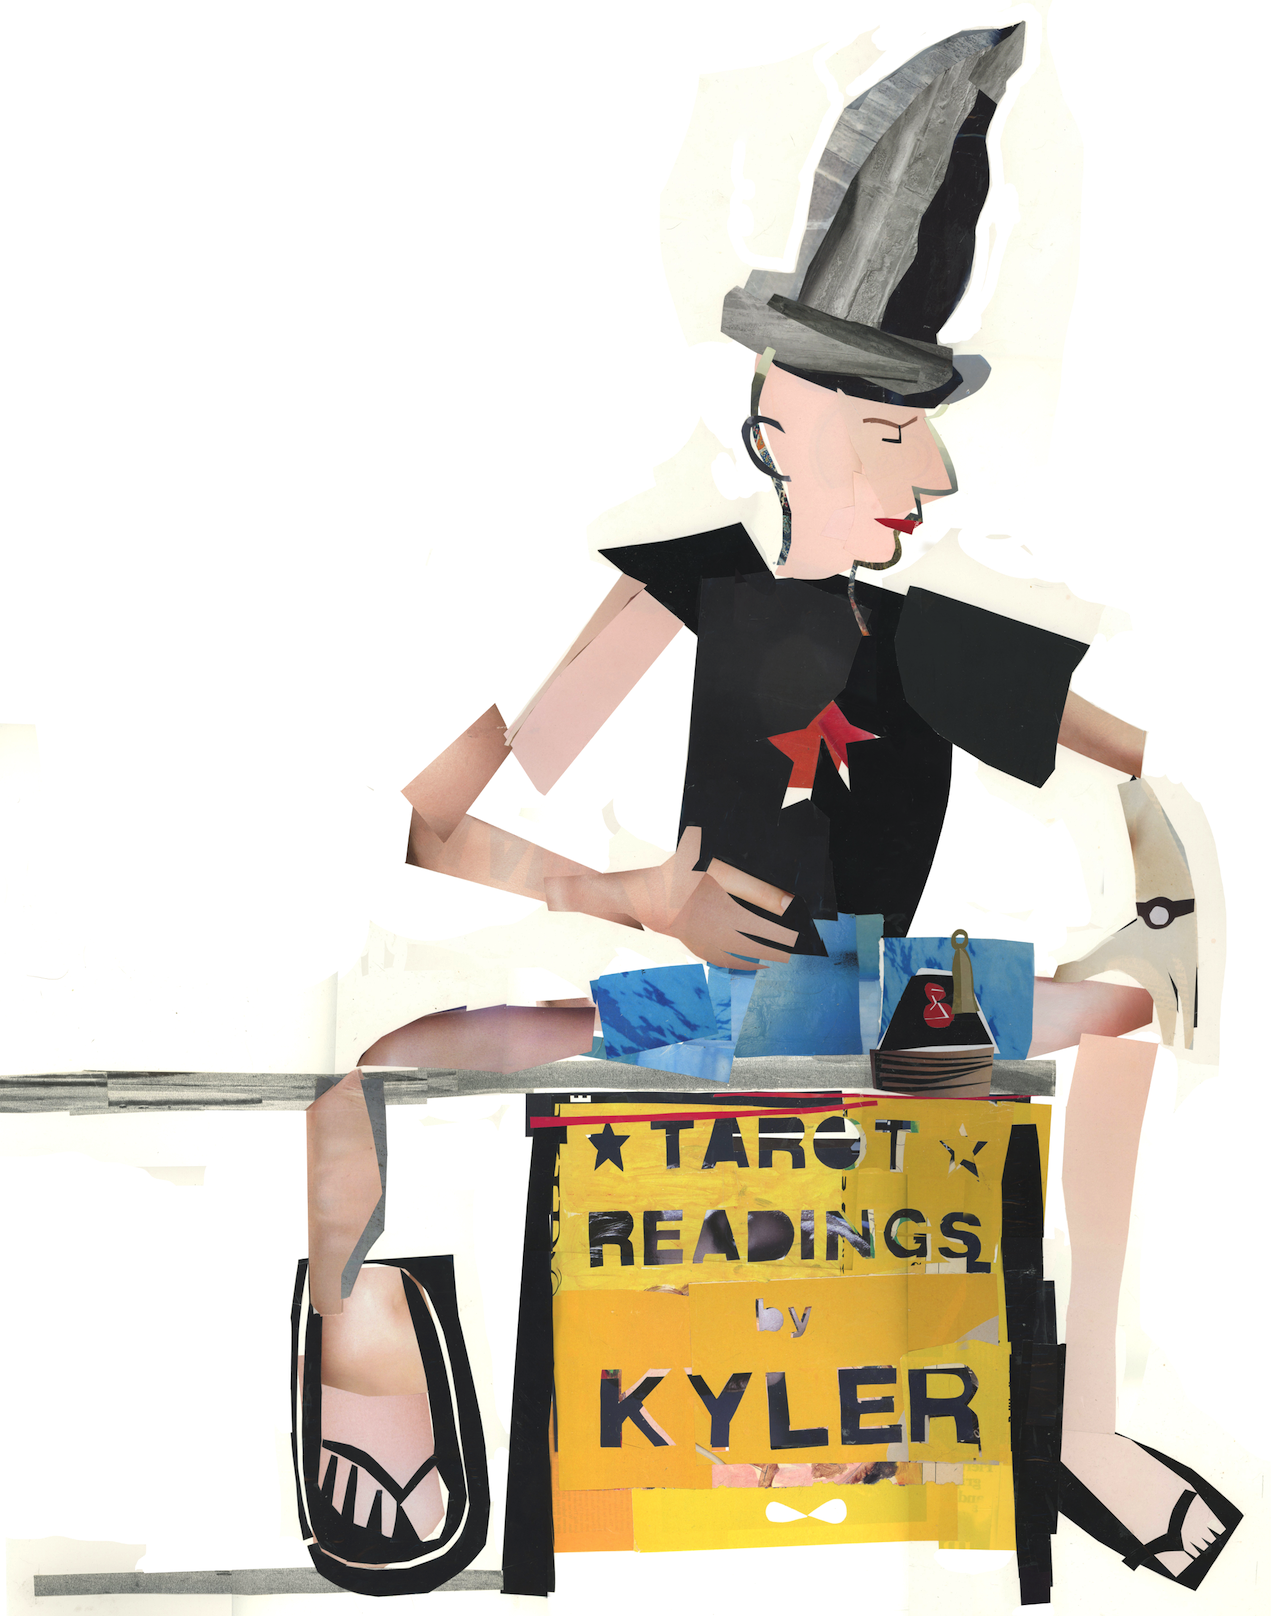 Kyler---tarot card readier in Washington Square Park